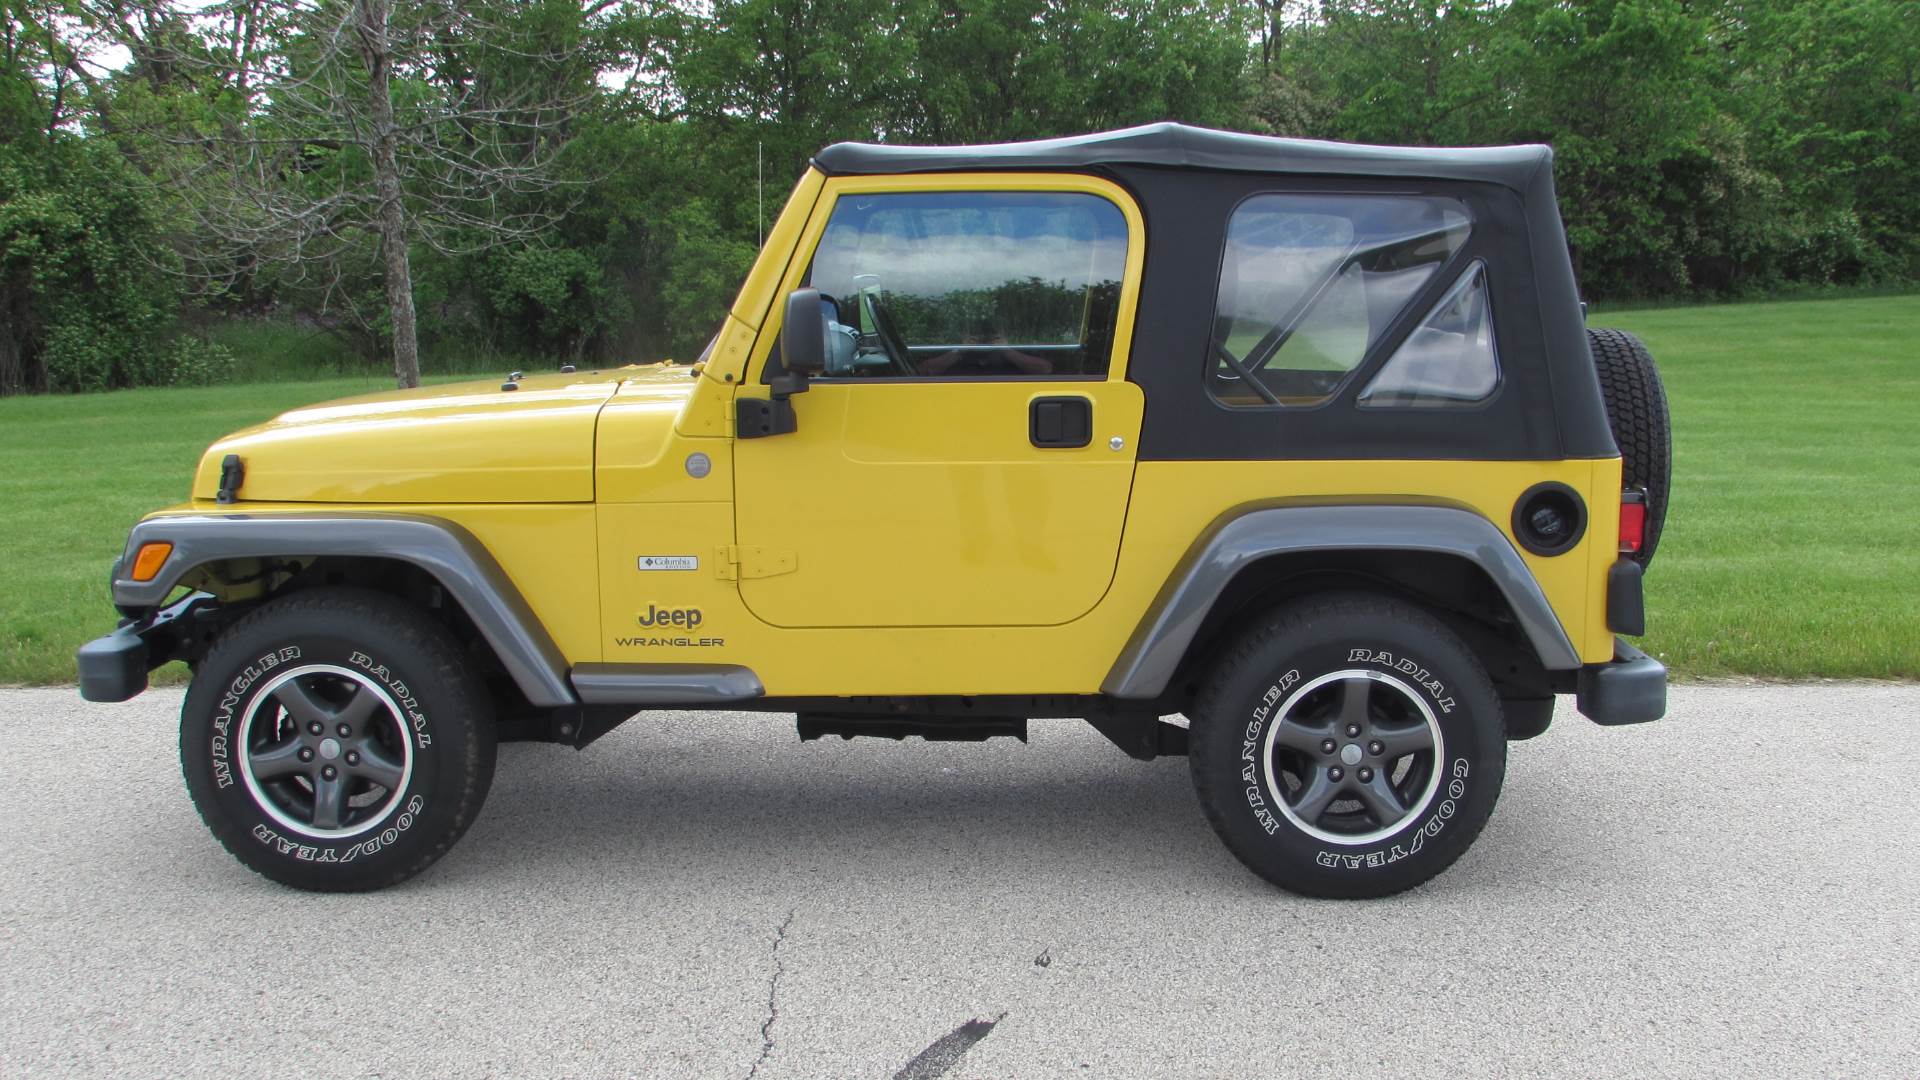 Used 2004 Jeep® Wrangler X Columbia | Automobile in Big Bend WI | 4025  Yellow